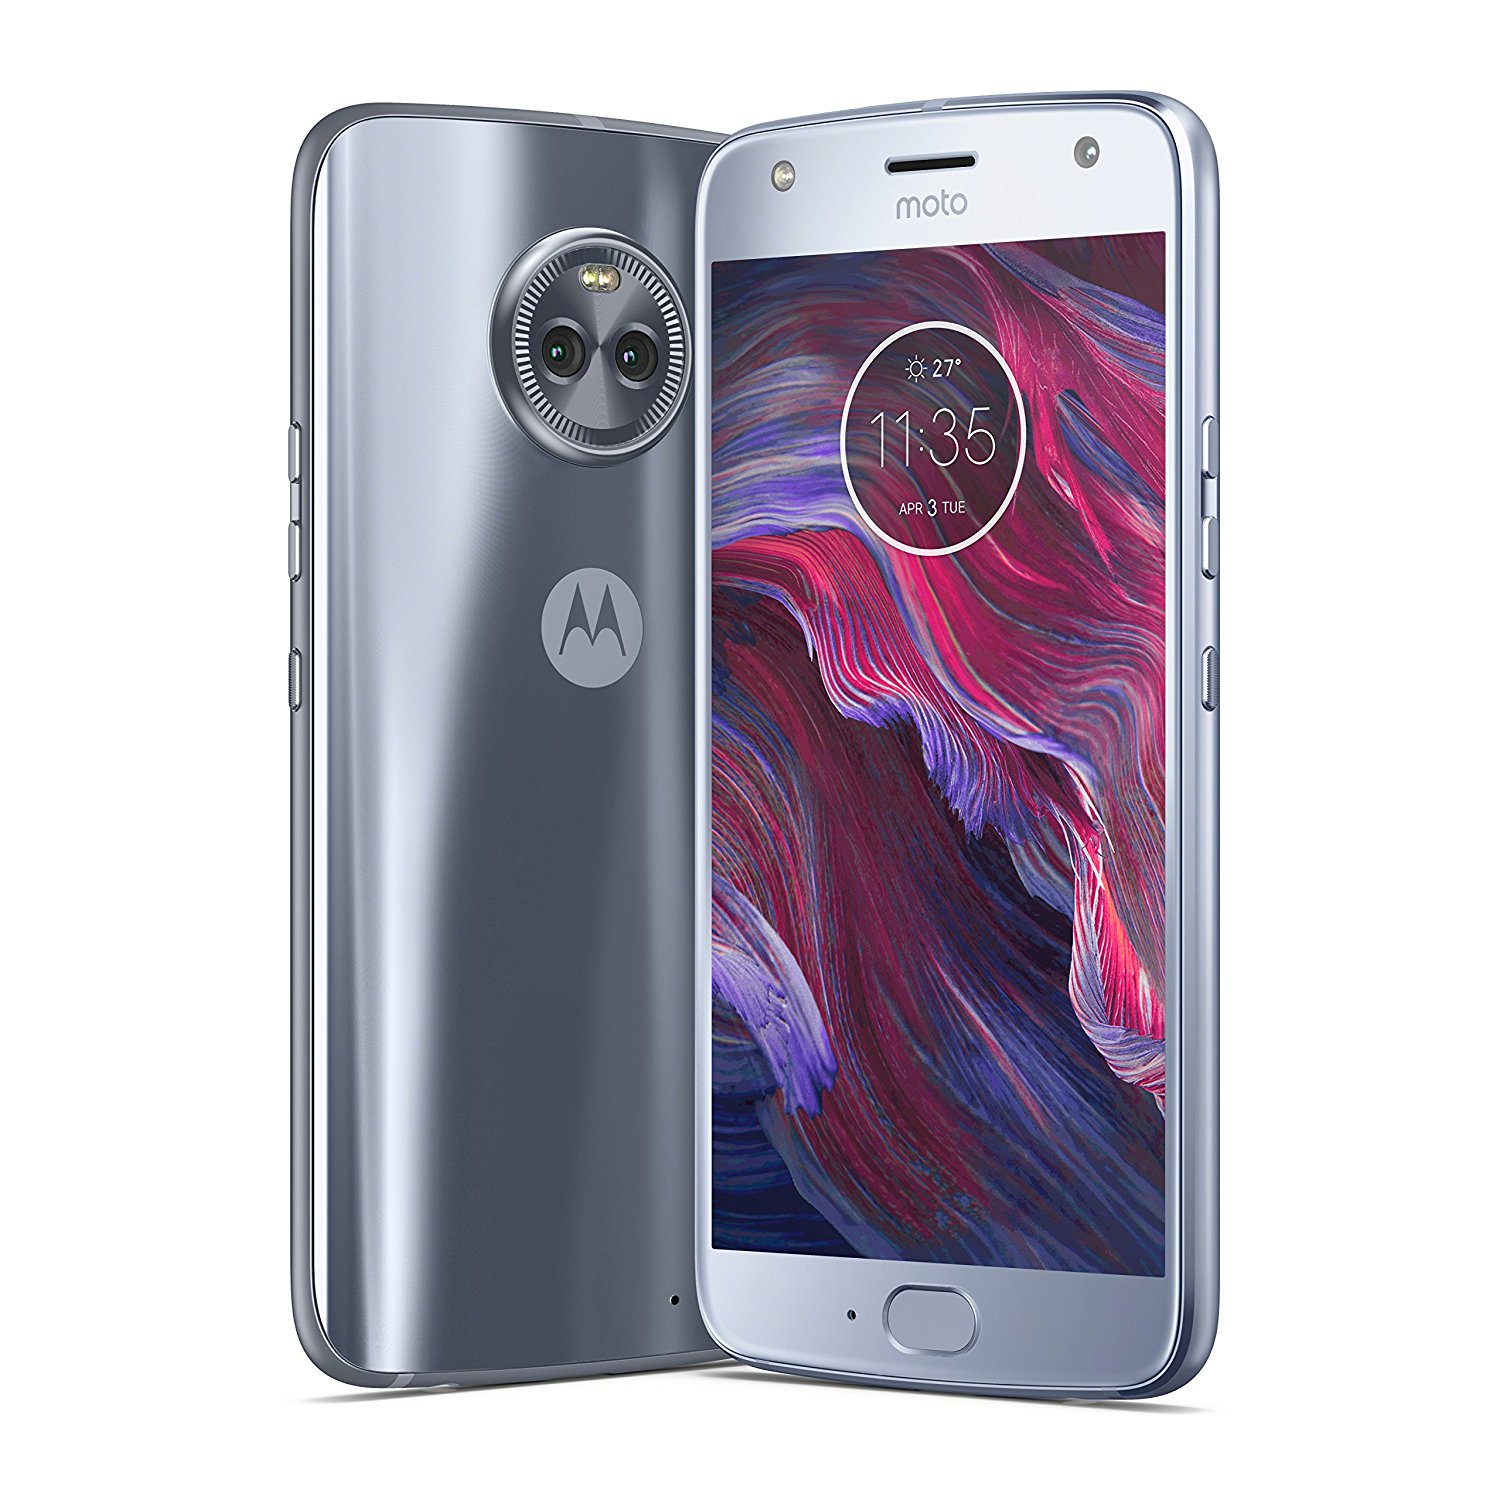 MotorolaのSIMフリースマートフォン｢Moto X4｣発売。国内全キャリア対応